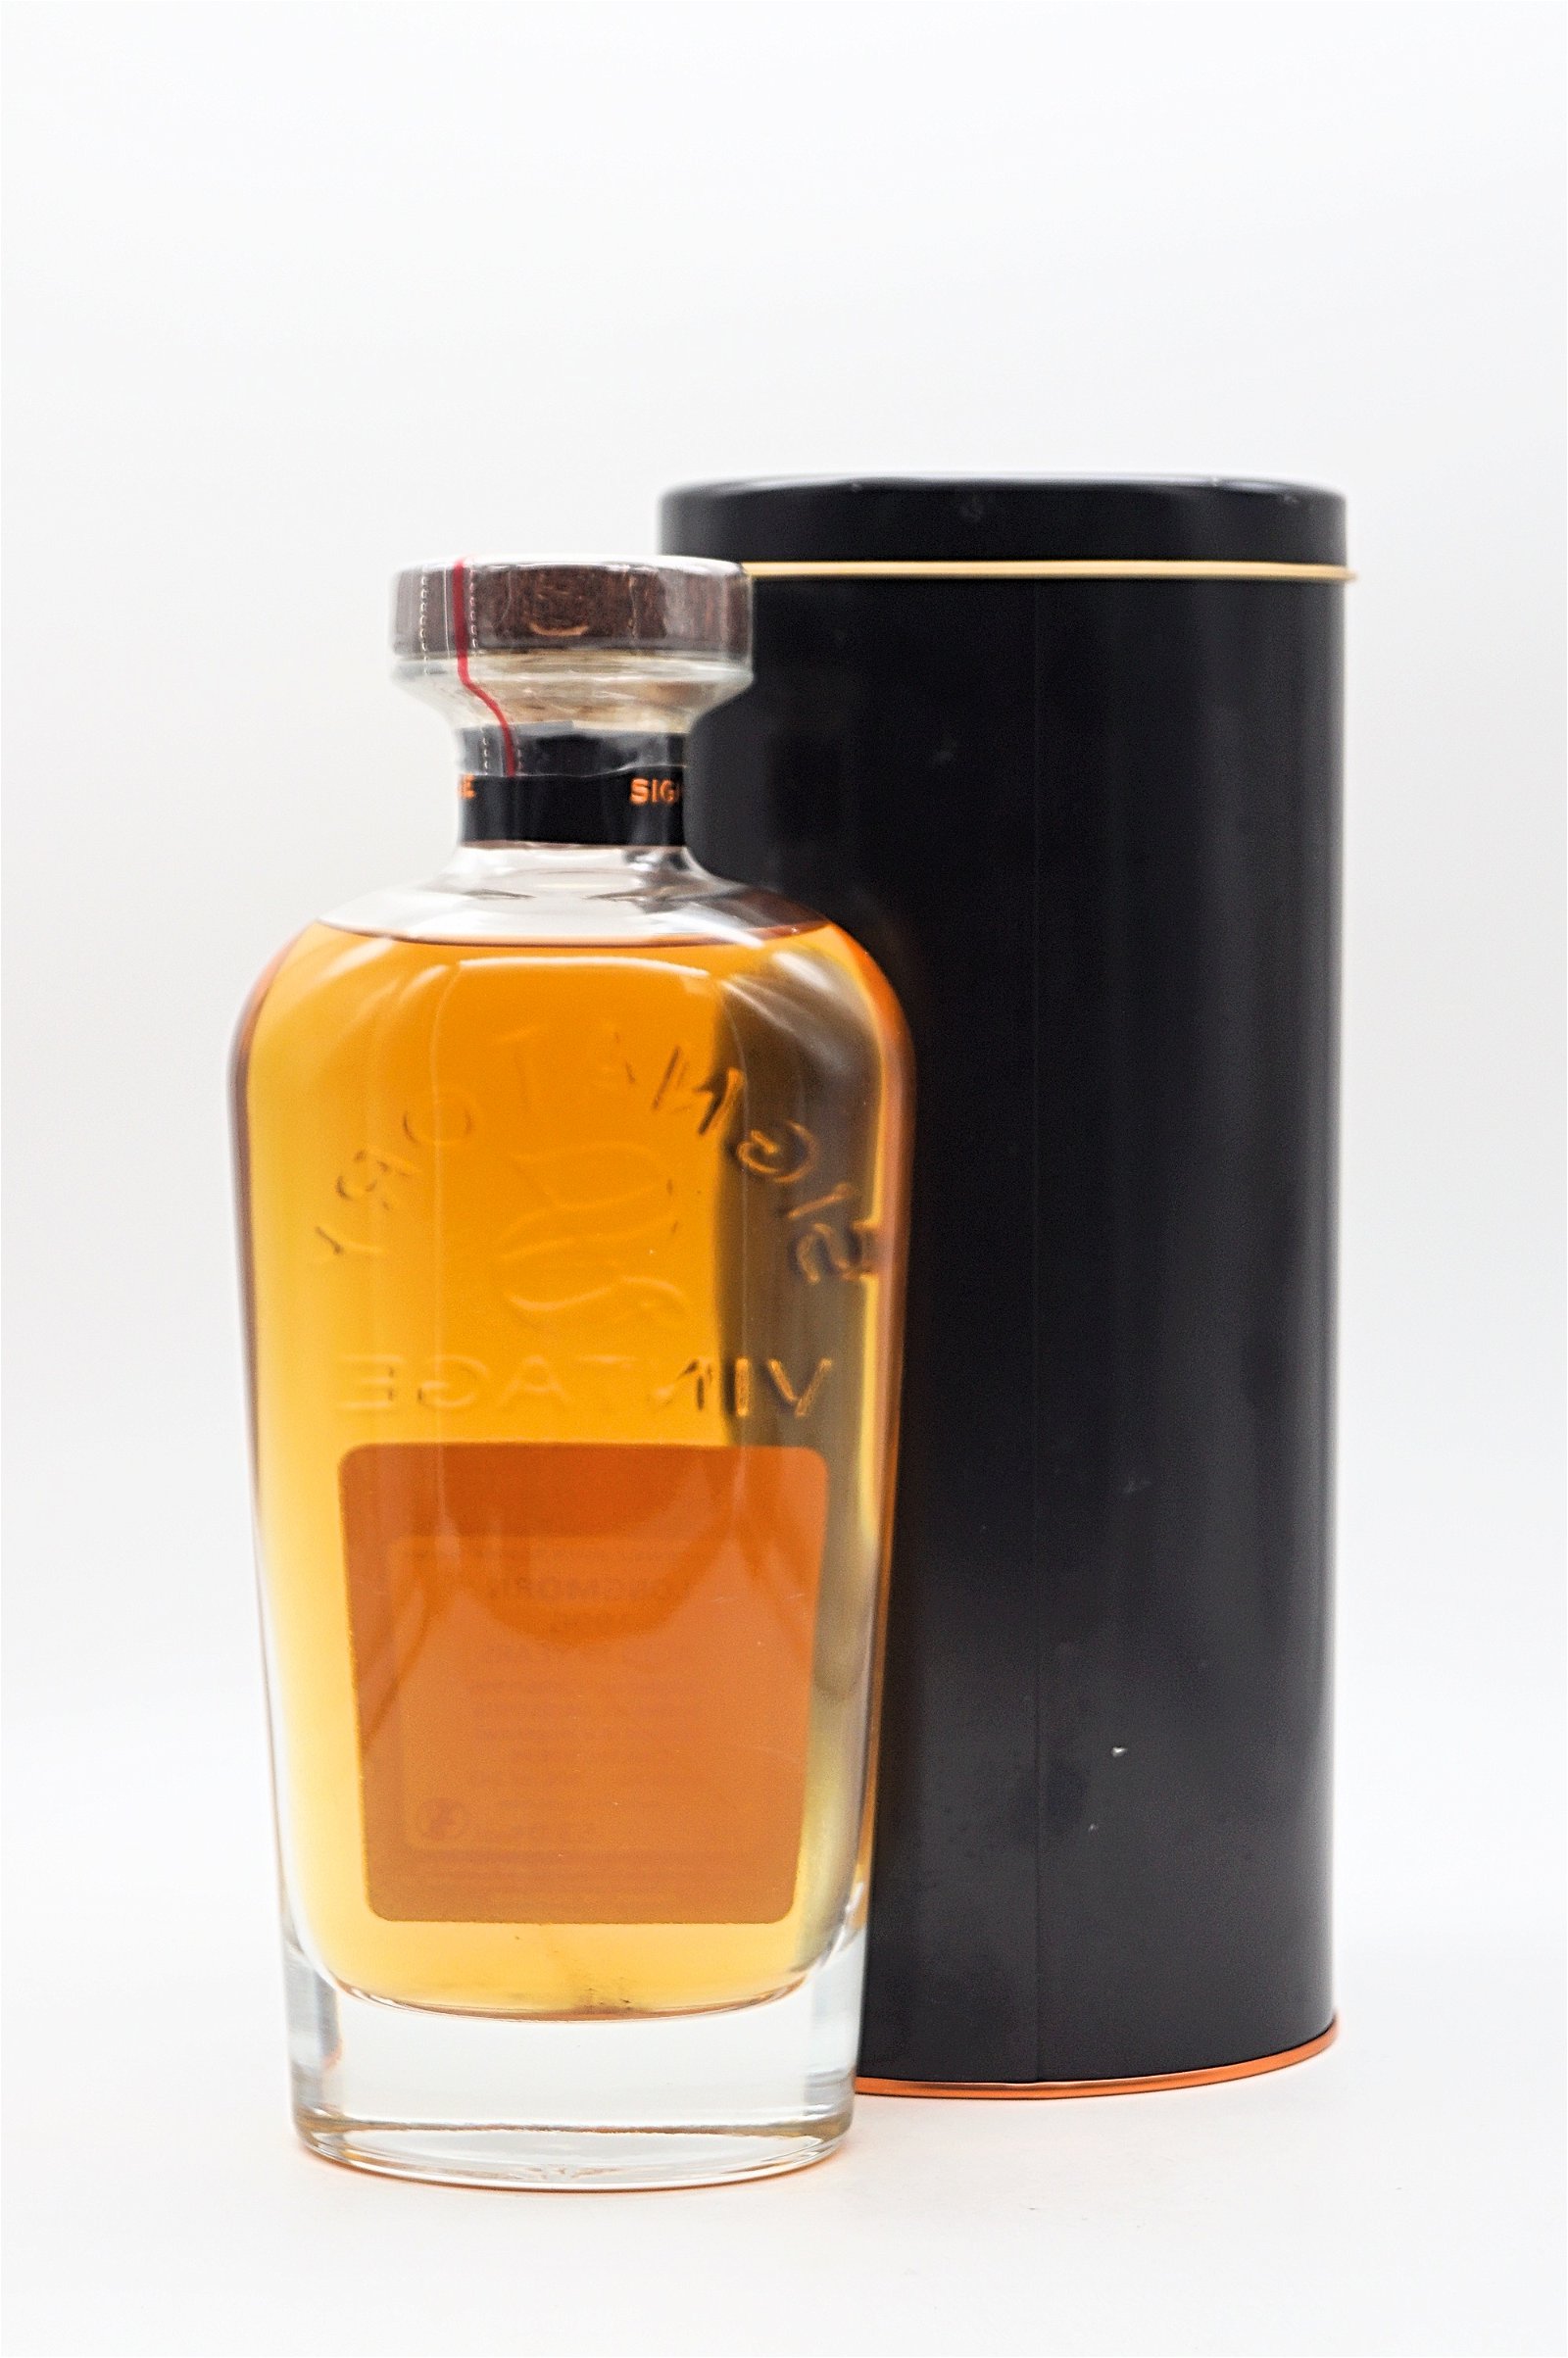 Signatory Vintage Cask Strength Collection Longmorn 19 Jahre 1996/2016 Speyside Single Malt Scotch Whisky